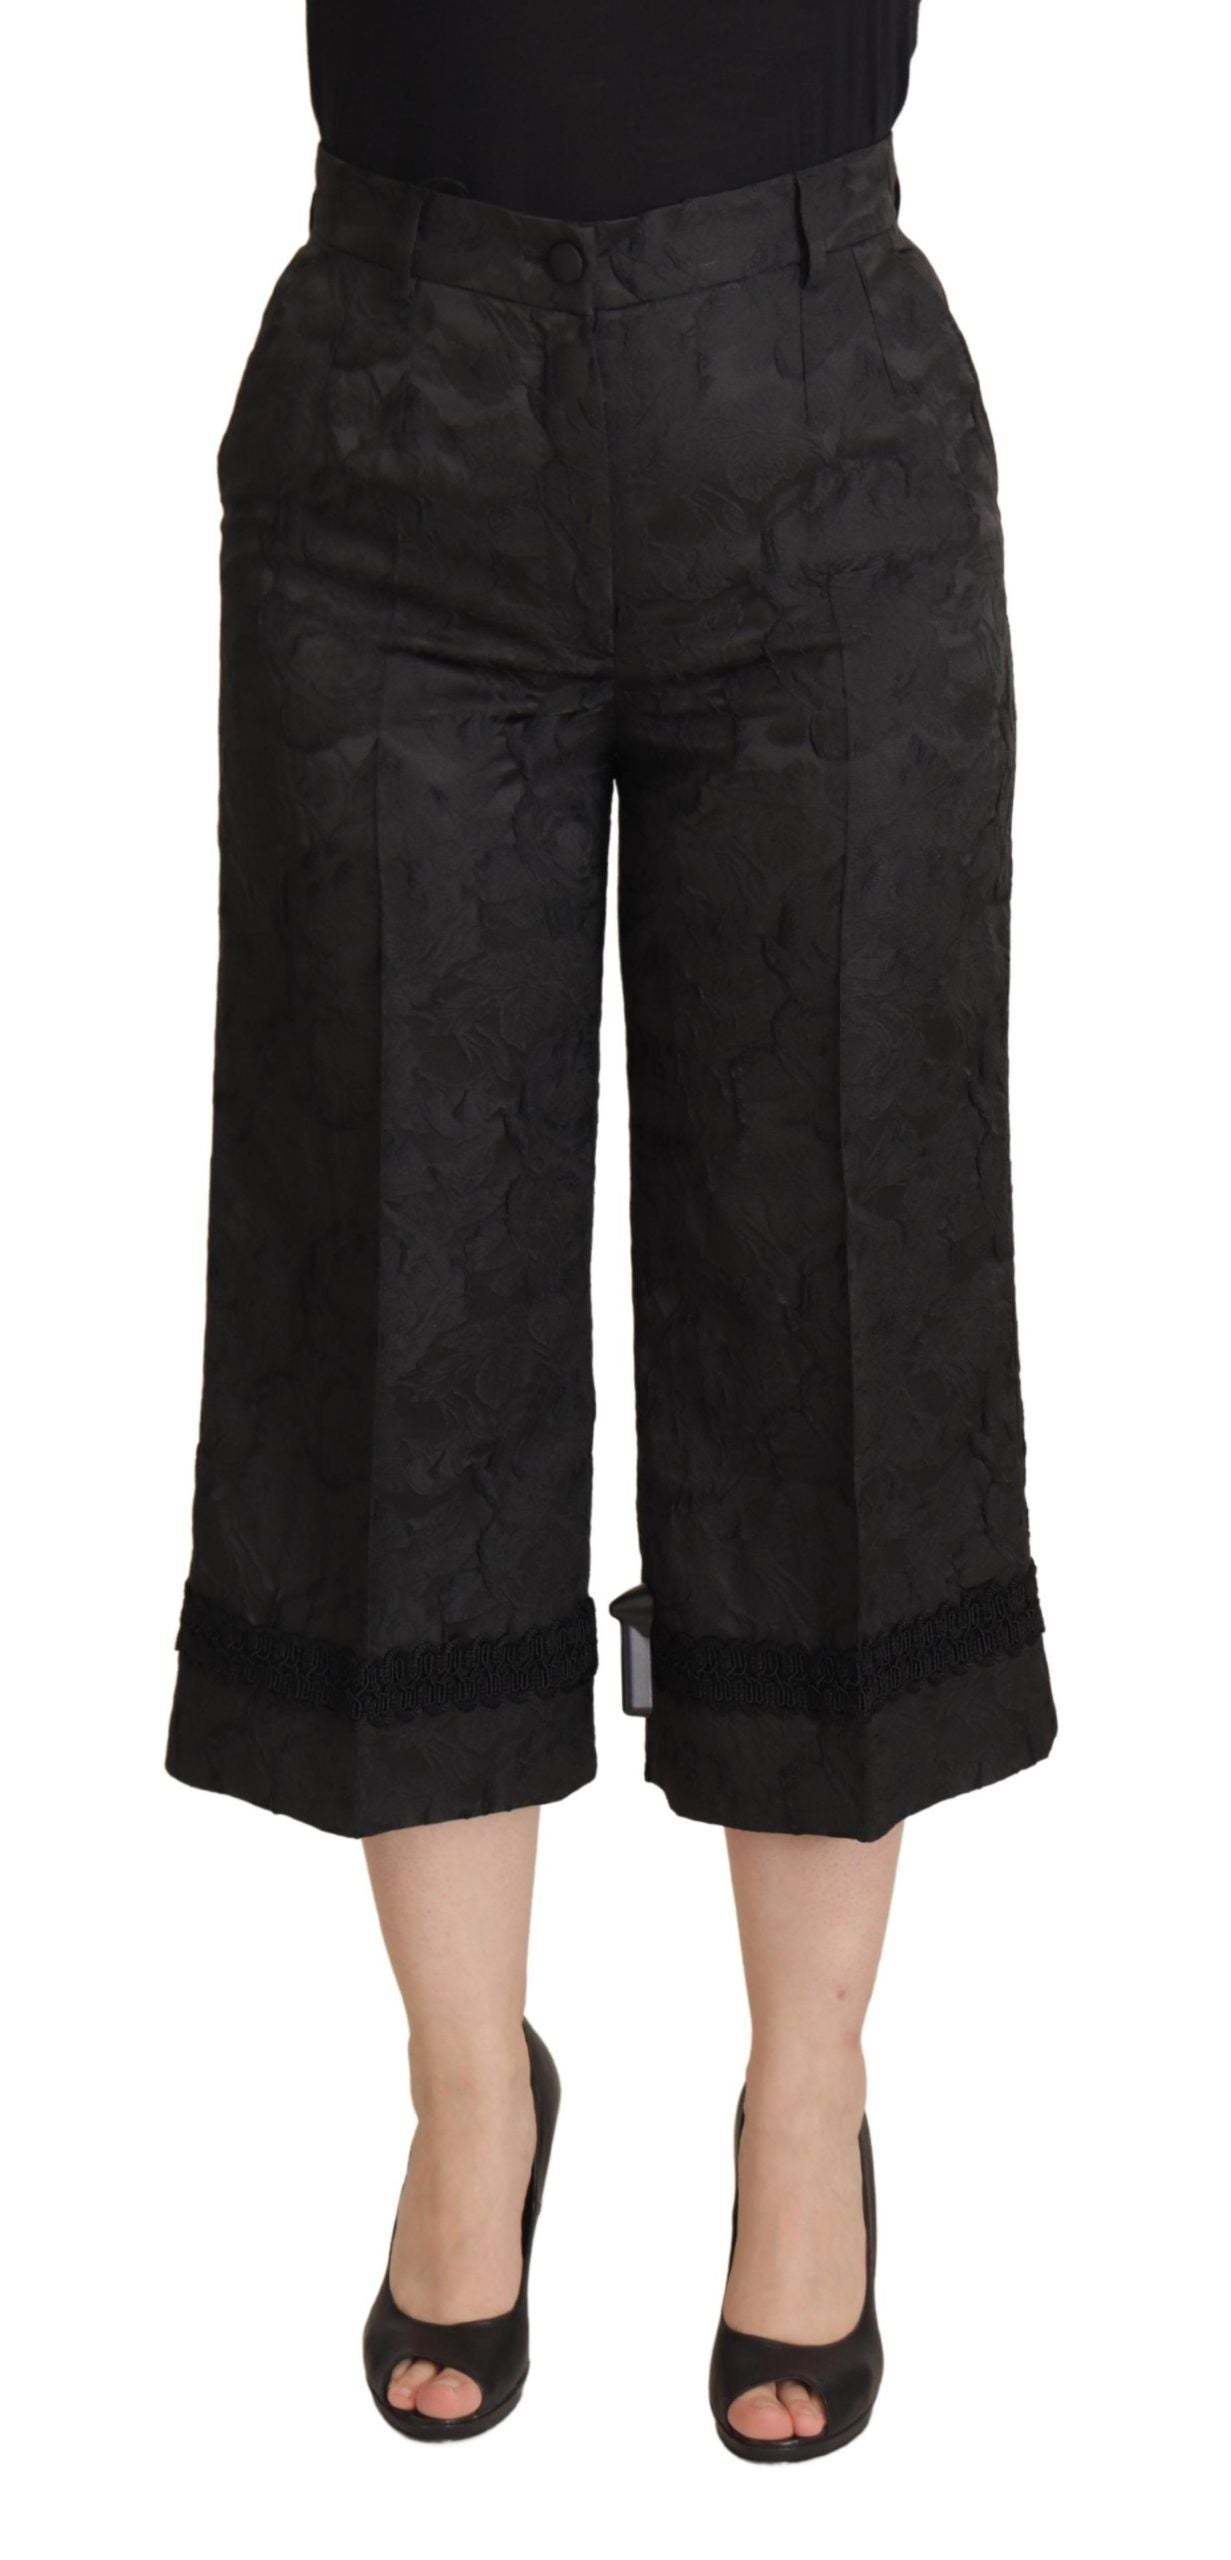 Elegant Black Brocade Cropped Pants